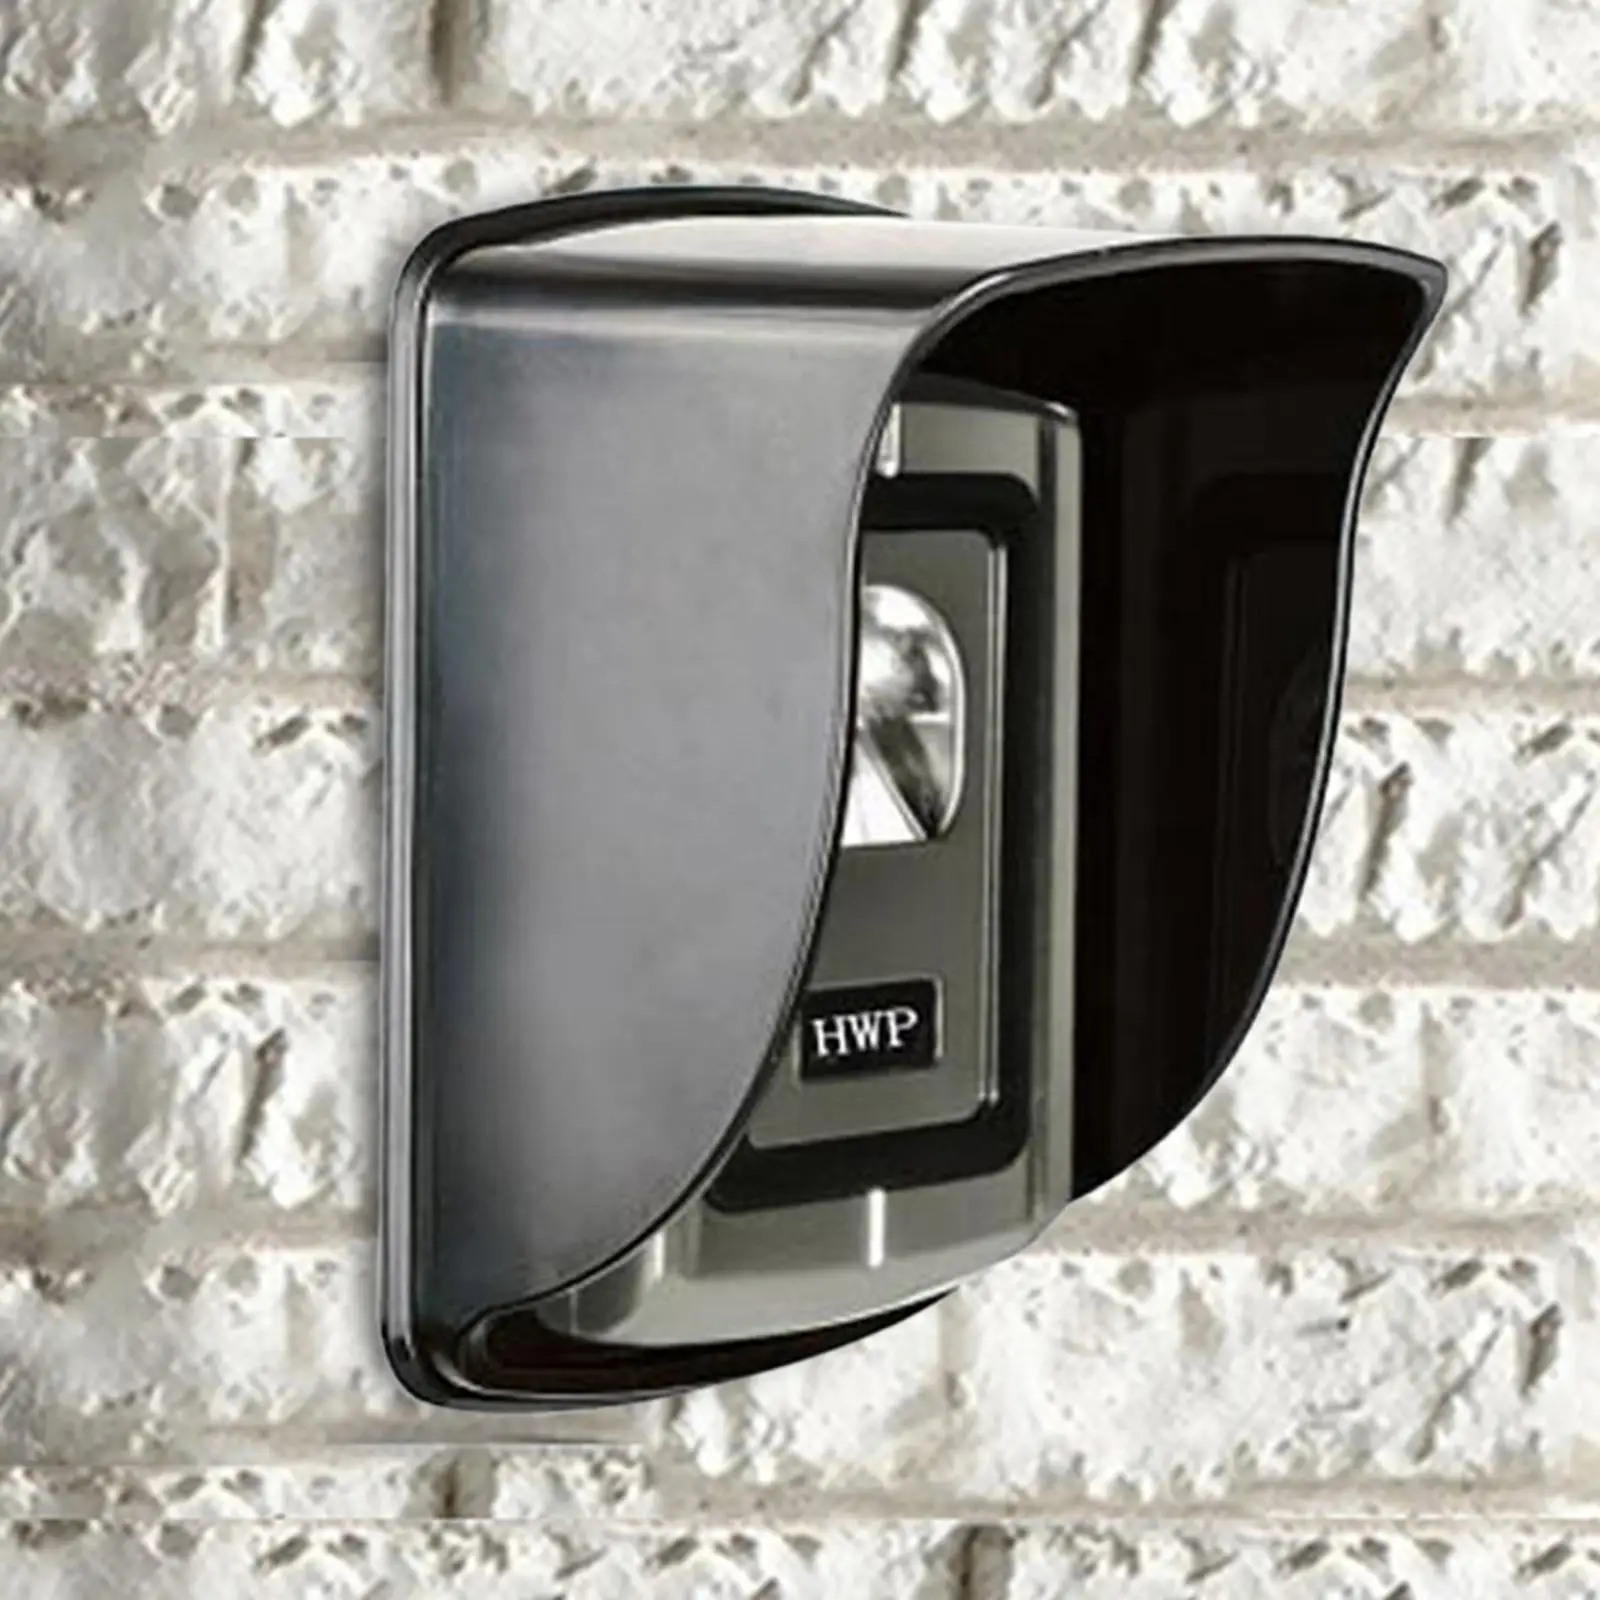 Doorbell Rain Cover Doorbell Protector Replace Outside for Door Phone Intercom Access Control Keypads Bell Button Video Doorbell